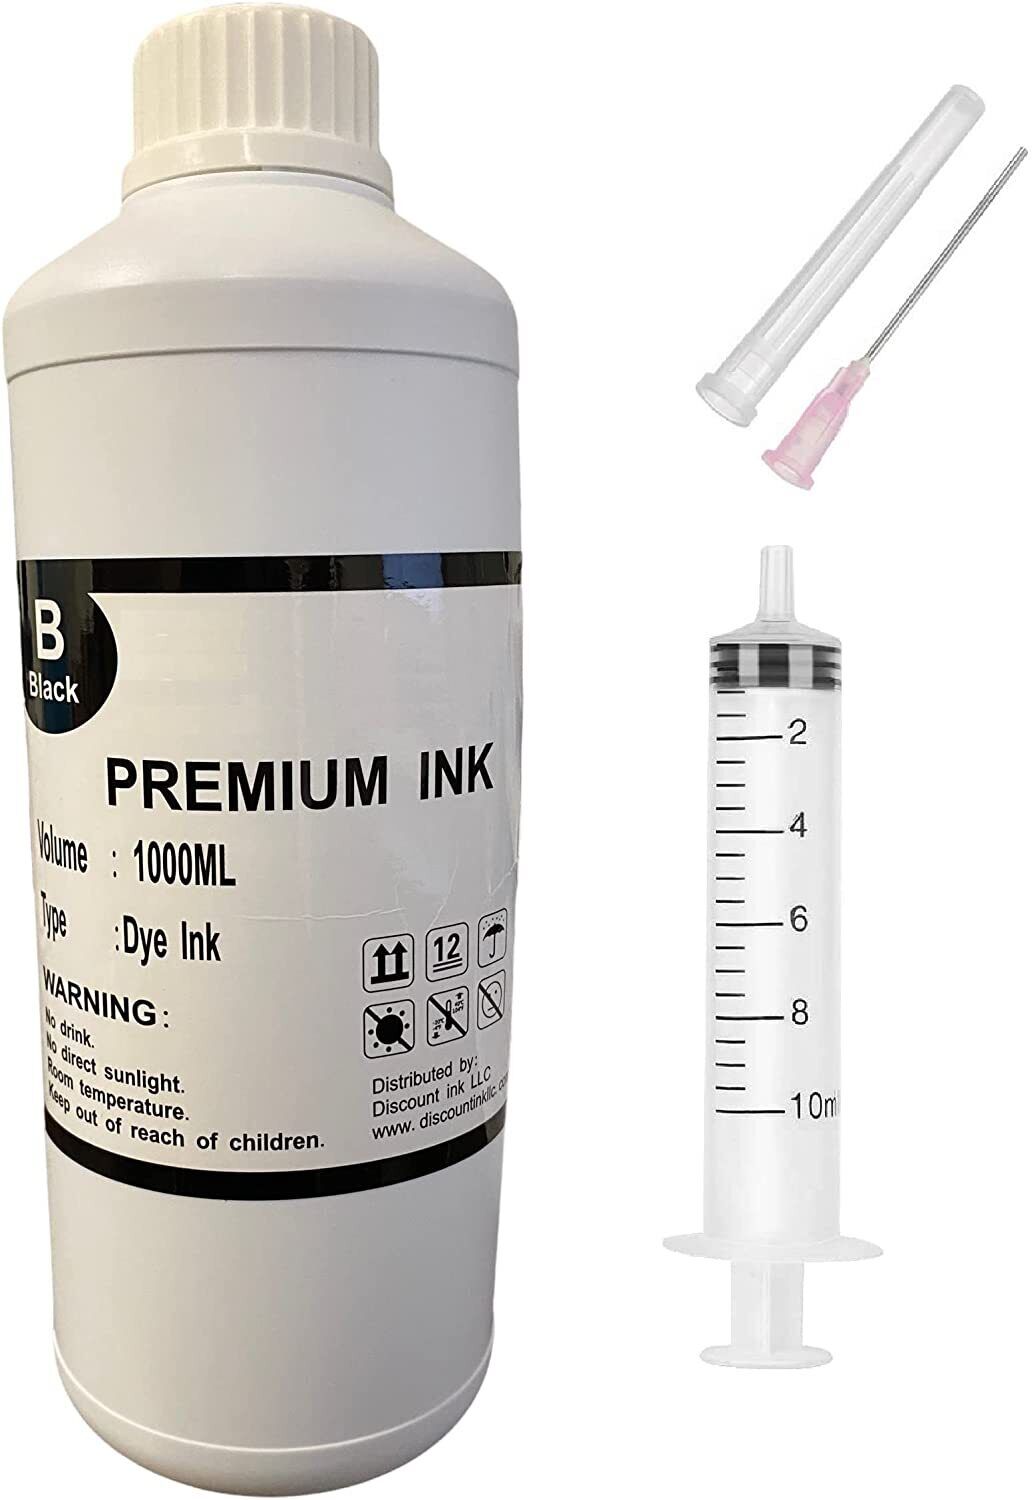 Liter-1000ml Black Bulk Refill Ink for all HP, Epson, Brother, Canon Printers